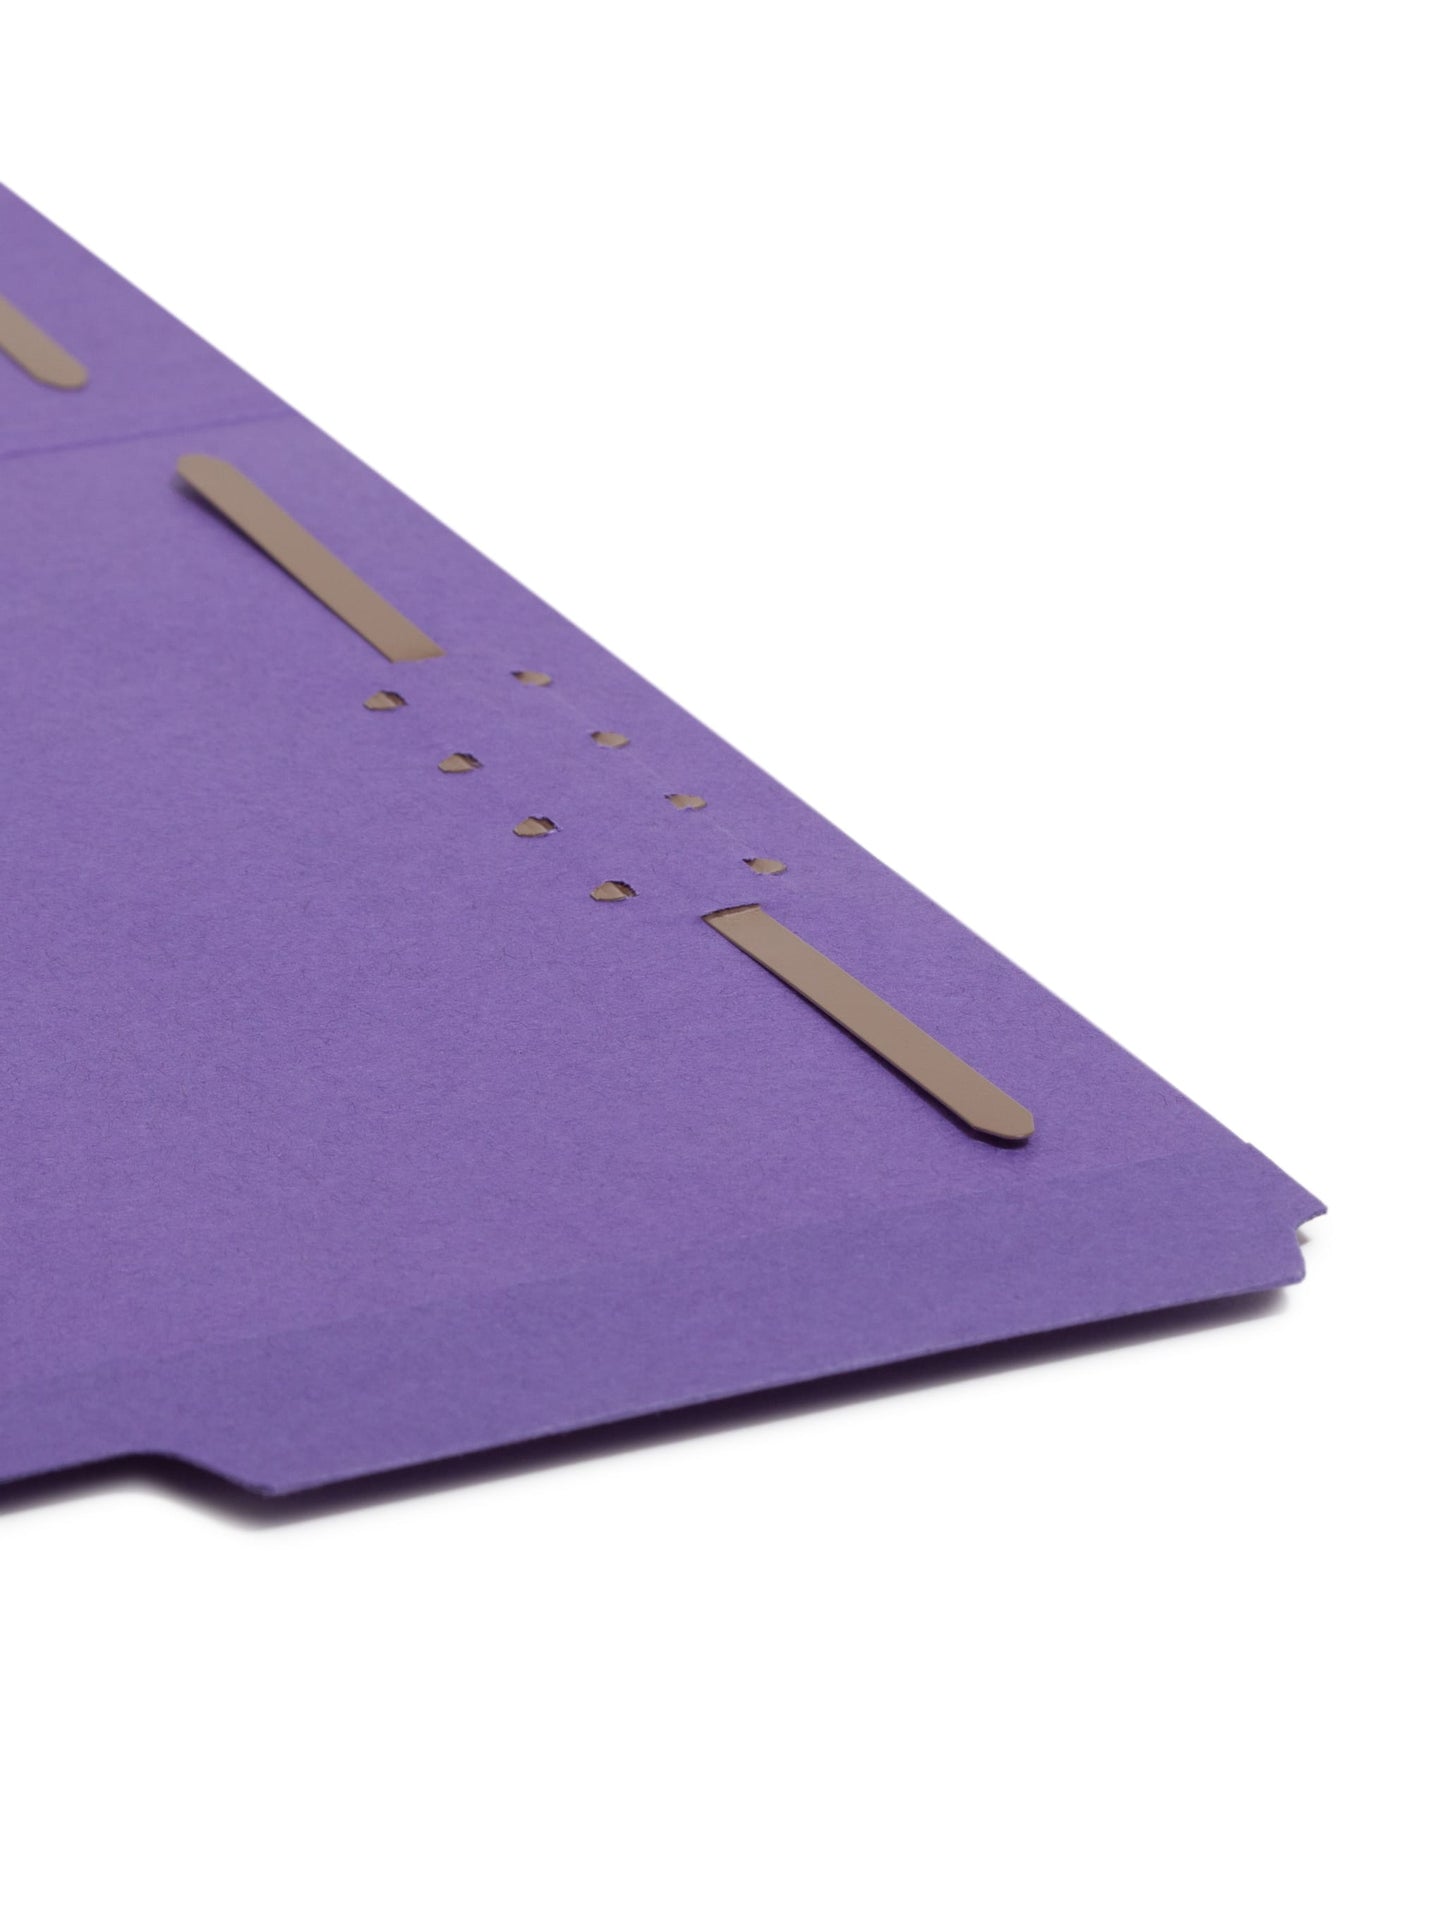 Reinforced Tab Fastener File Folders, 1/3-Cut Tab, 2 Fasteners, Purple Color, Letter Size, Set of 50, 086486130400